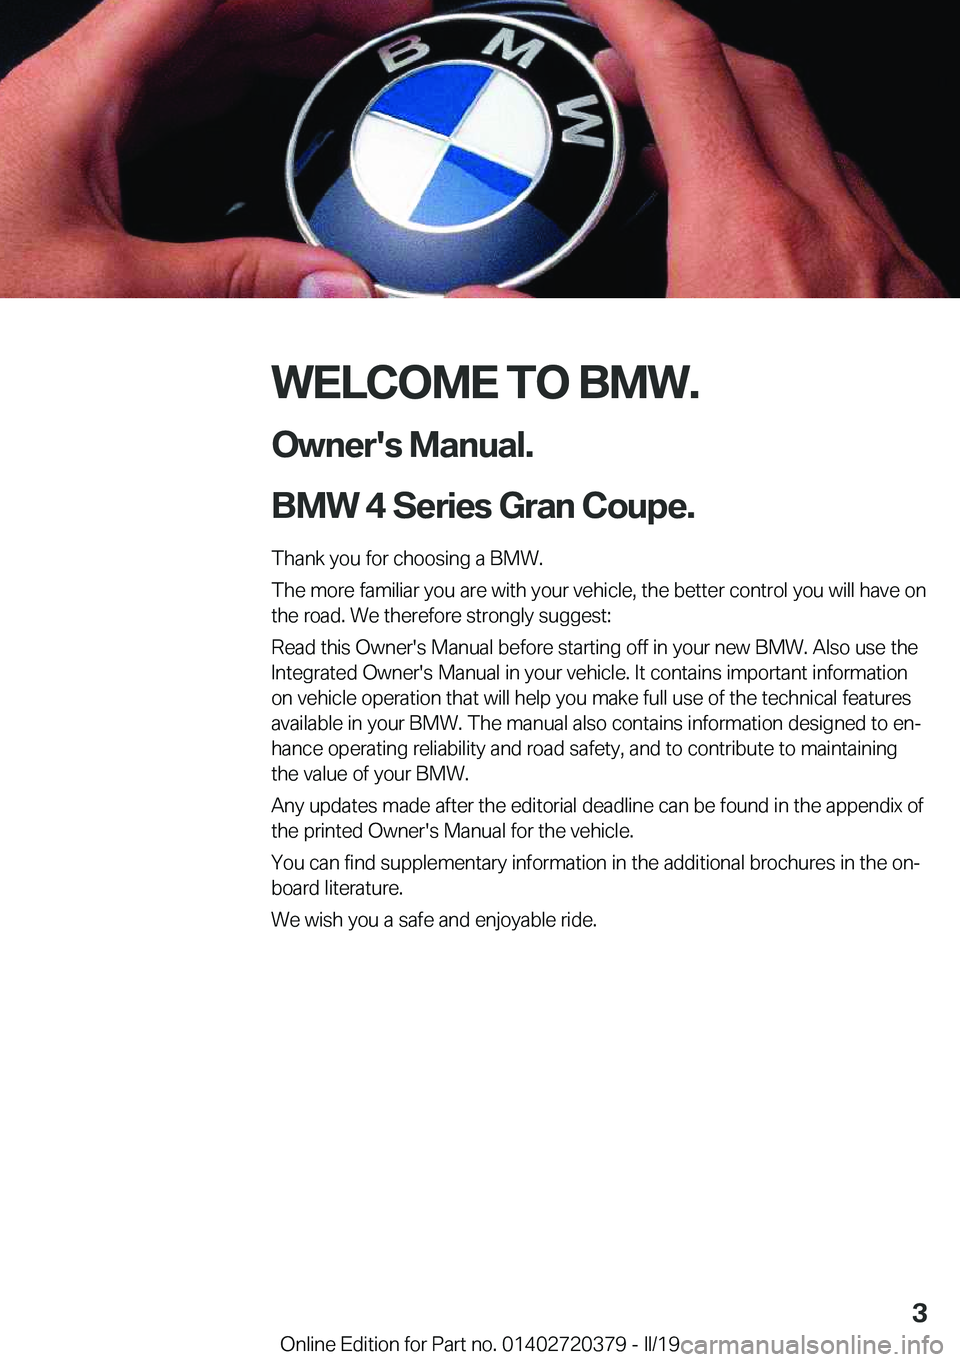 BMW 4 SERIES COUPE 2020  Owners Manual �W�E�L�C�O�M�E��T�O��B�M�W�.�O�w�n�e�r�'�s��M�a�n�u�a�l�.
�B�M�W��4��S�e�r�i�e�s��G�r�a�n��C�o�u�p�e�.�
�T�h�a�n�k��y�o�u��f�o�r��c�h�o�o�s�i�n�g��a��B�M�W�.
�T�h�e��m�o�r�e��f�a�m�